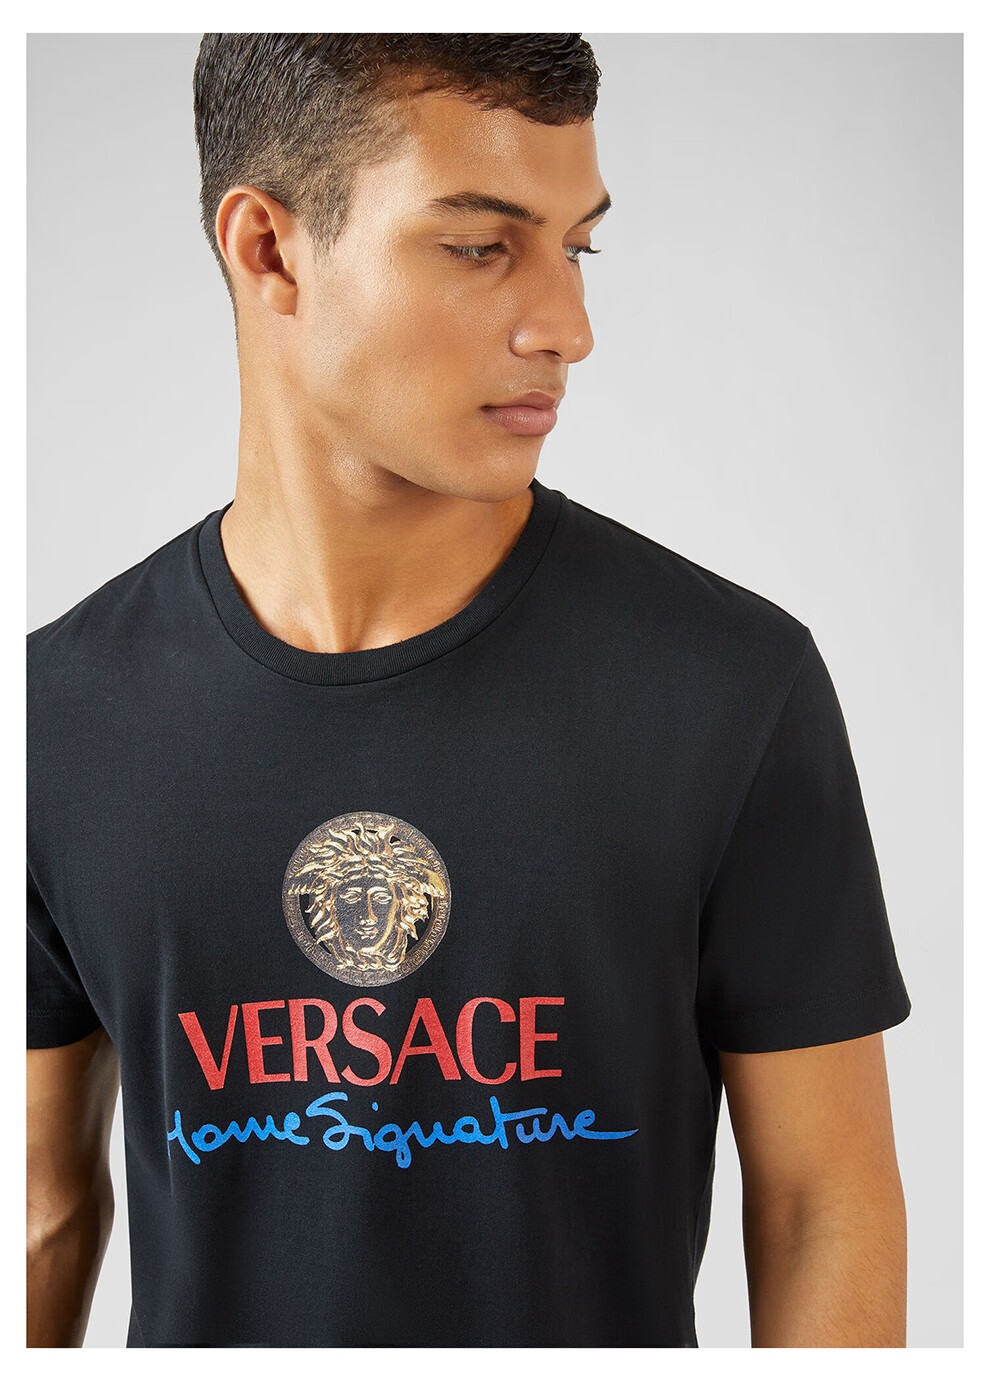 versace范思哲男装2020年新款男士棉质美杜莎头像印花短袖t恤衫送礼